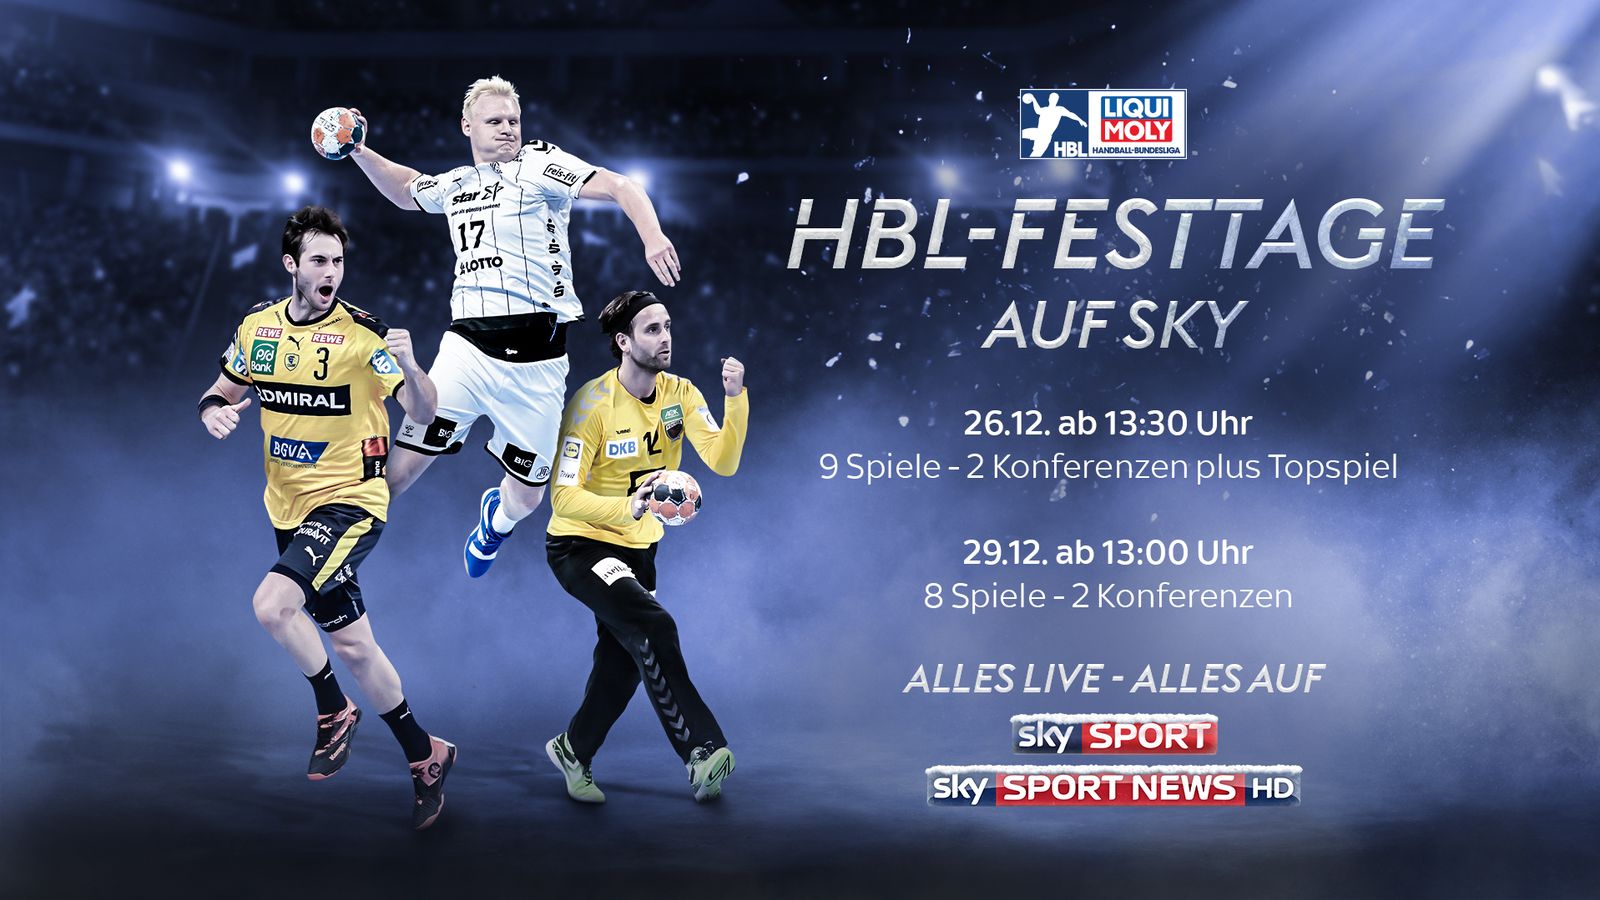 sky sport live stream free handball